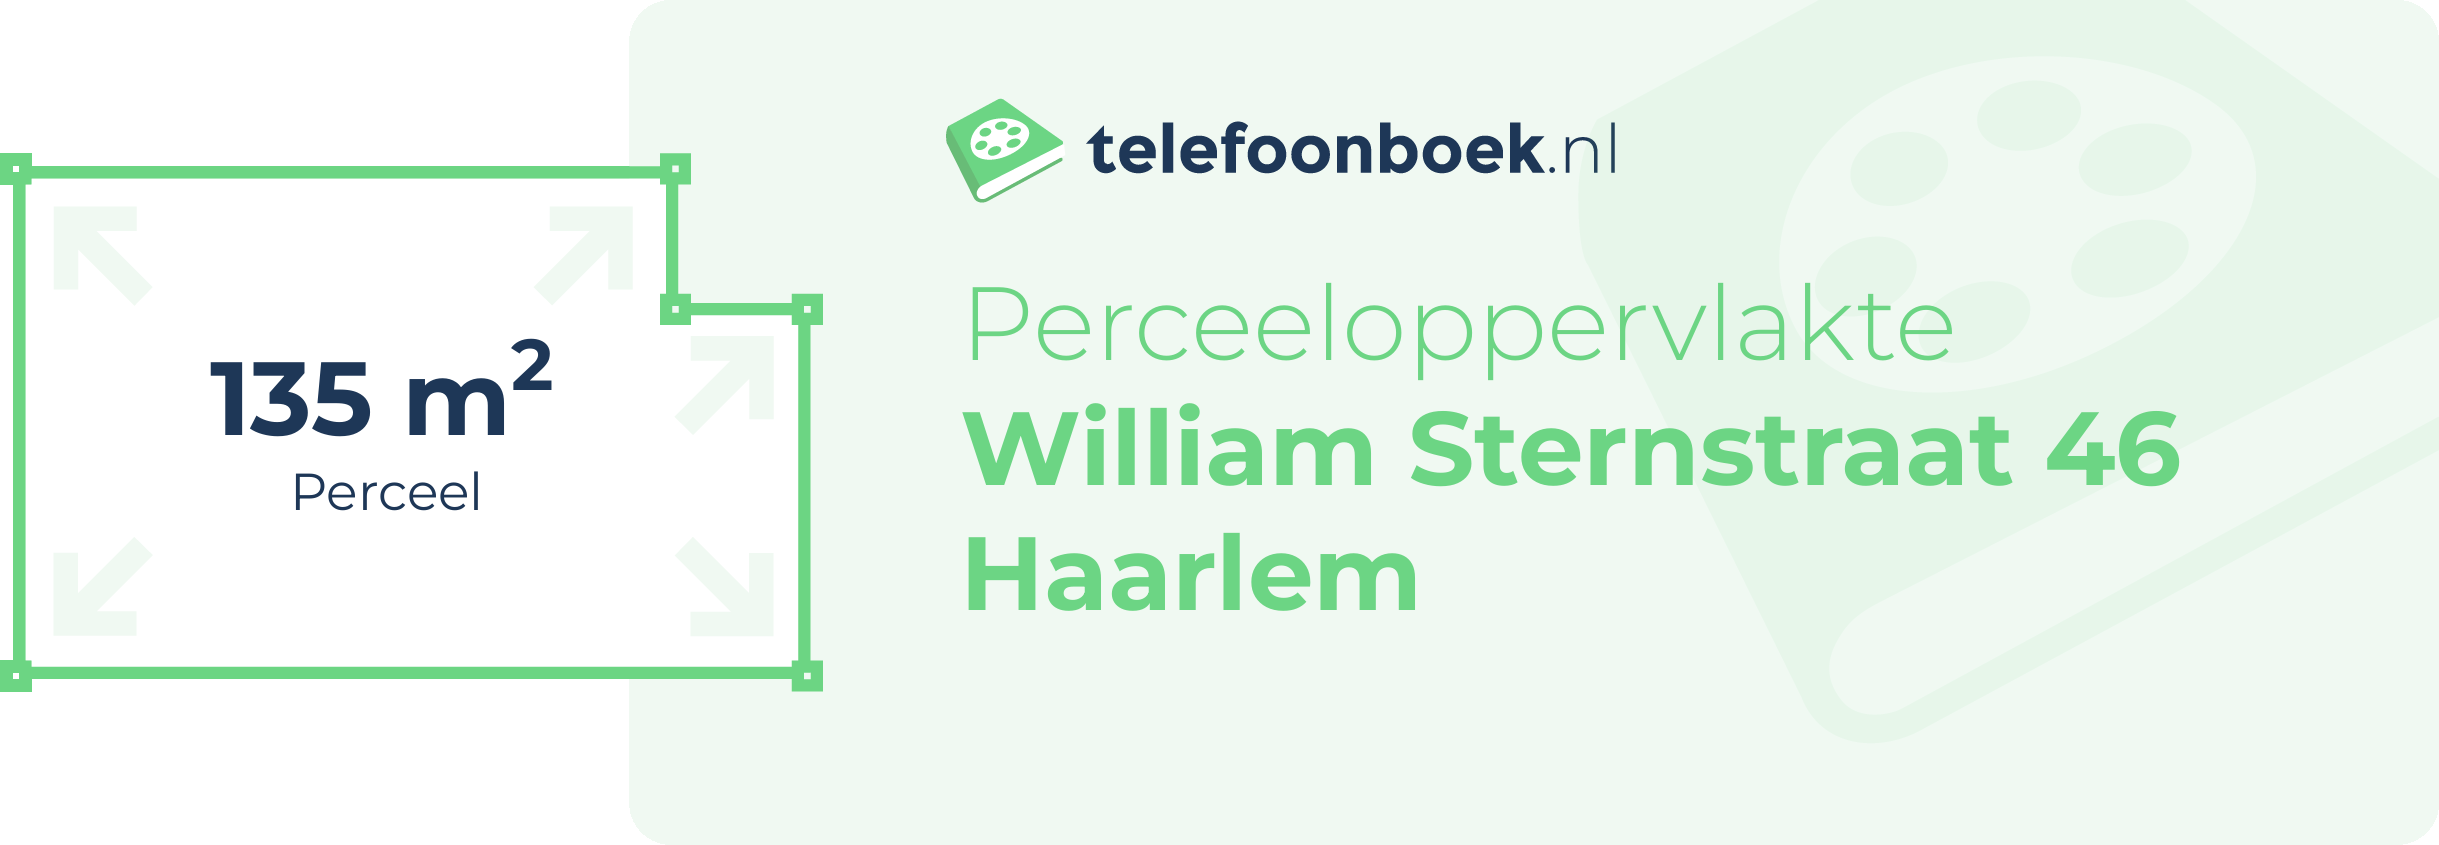 Perceeloppervlakte William Sternstraat 46 Haarlem